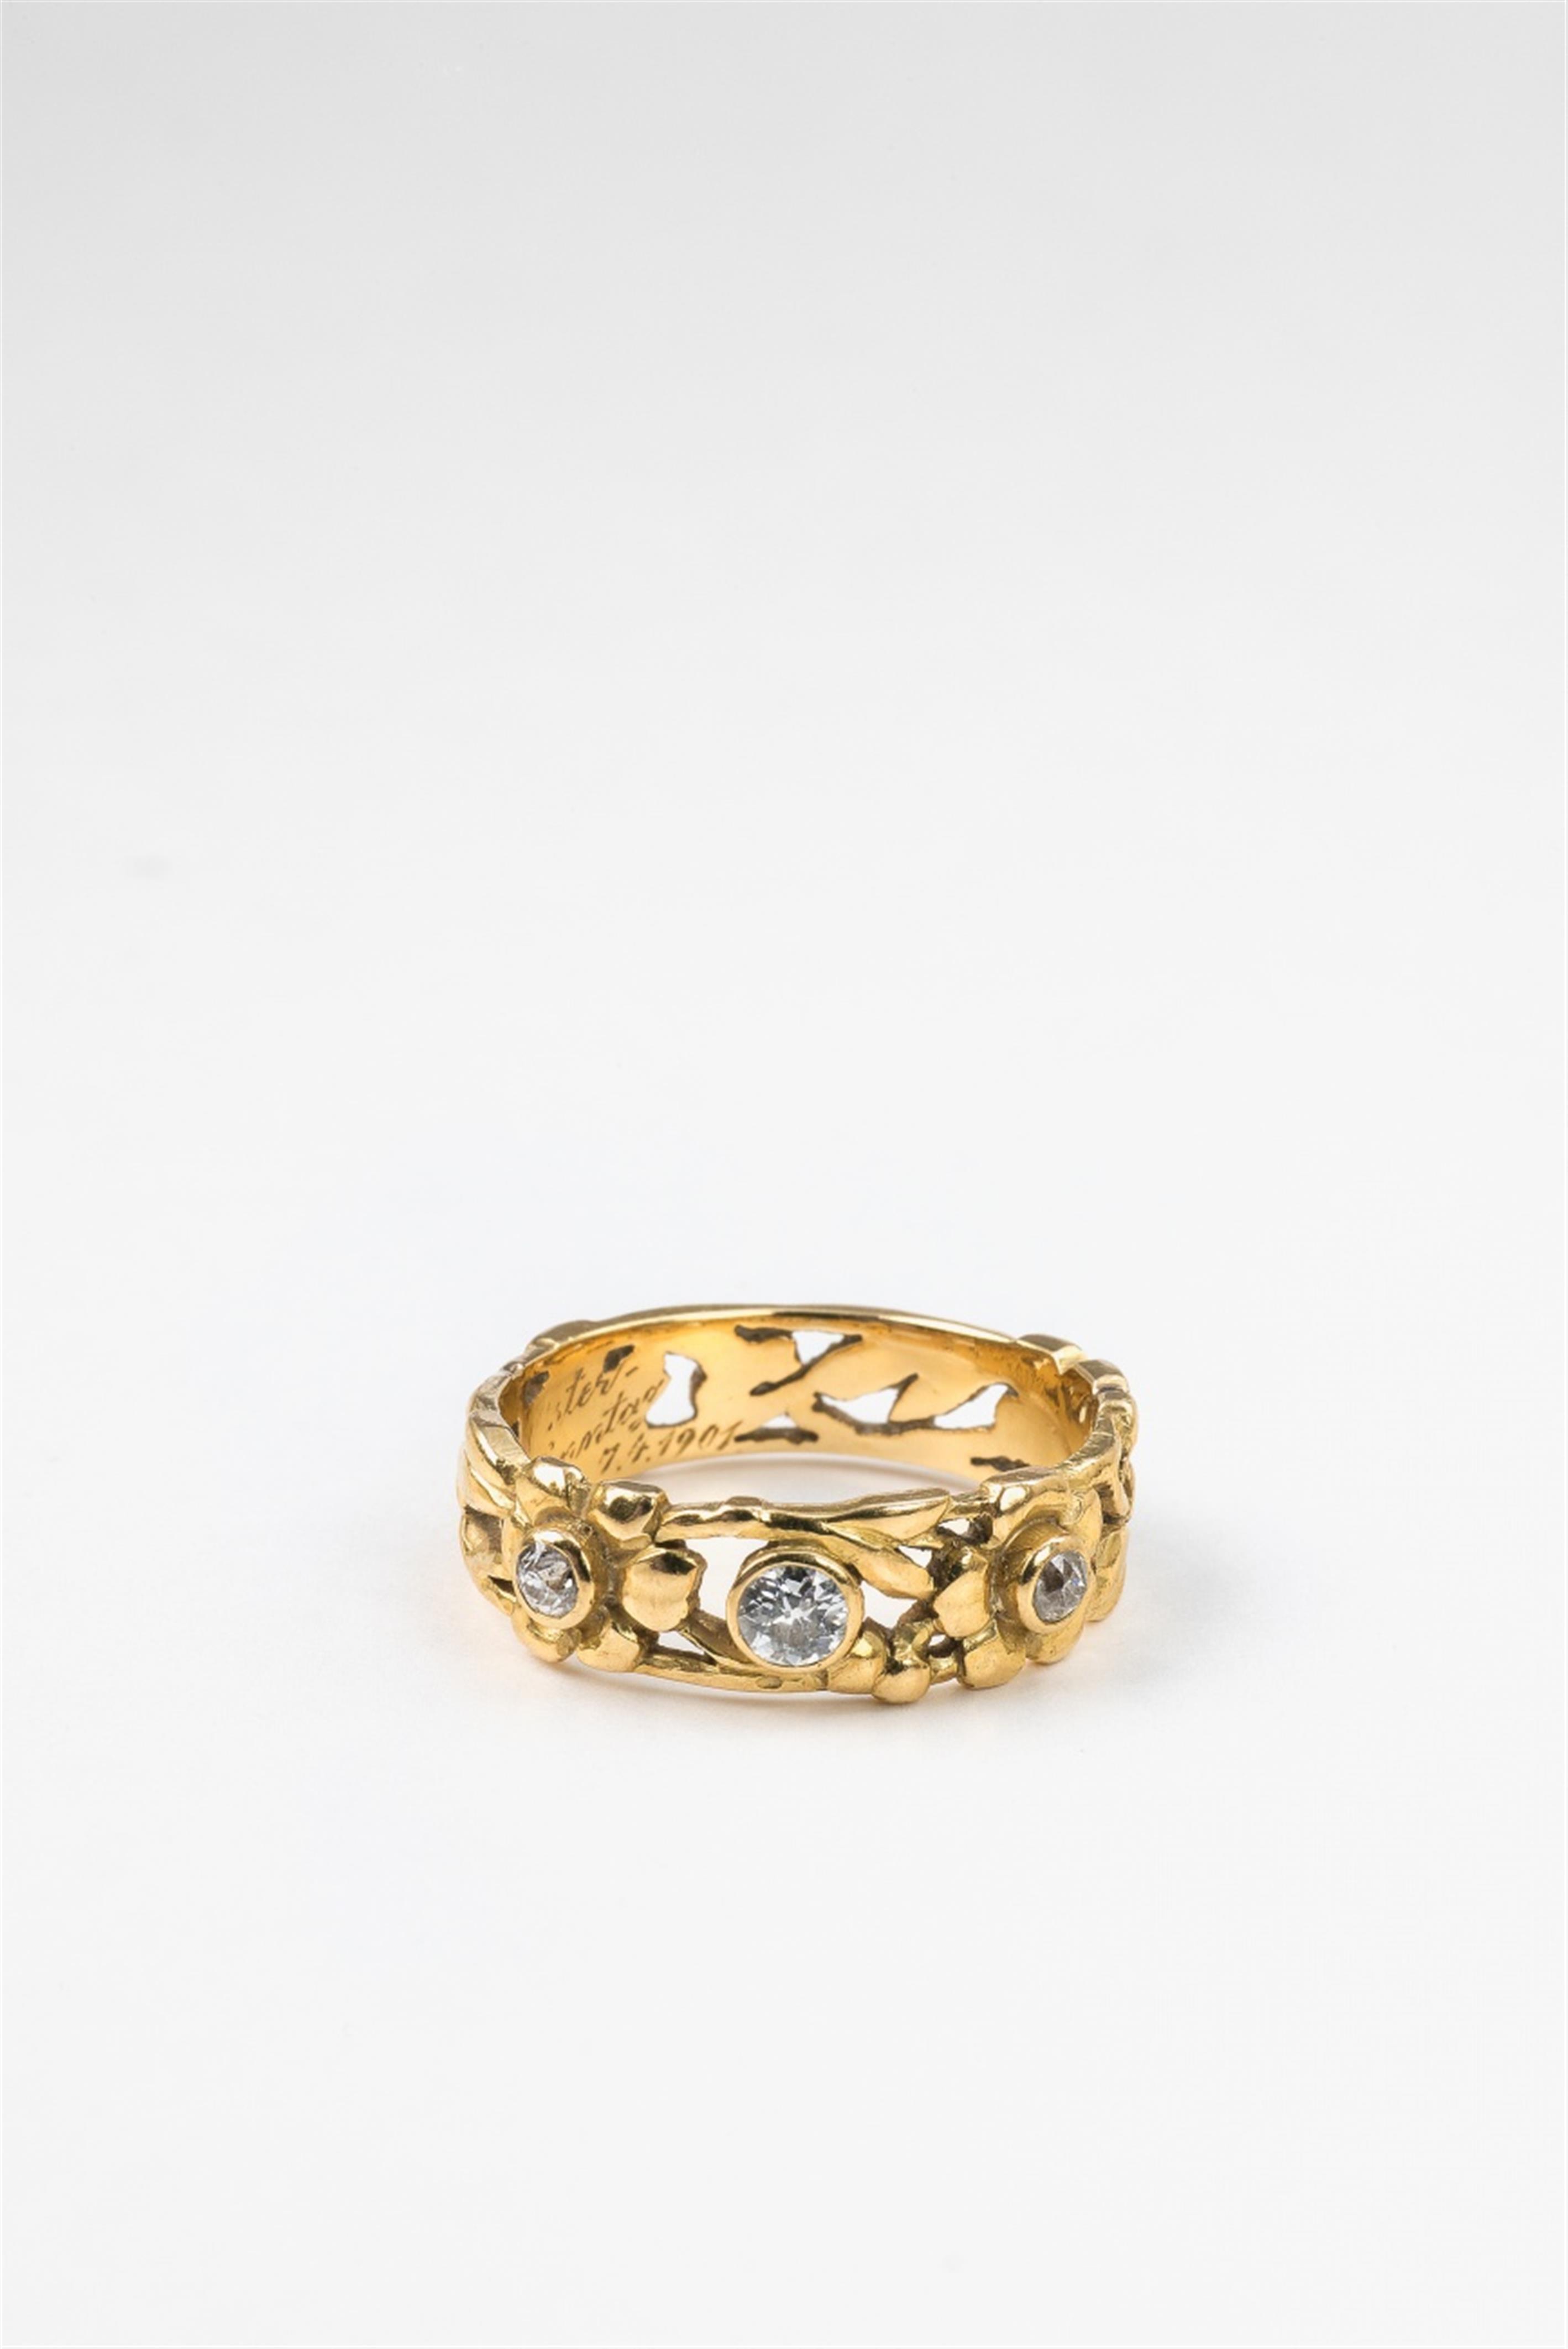 An 18k gold Art Nouveau diamond ring - image-1